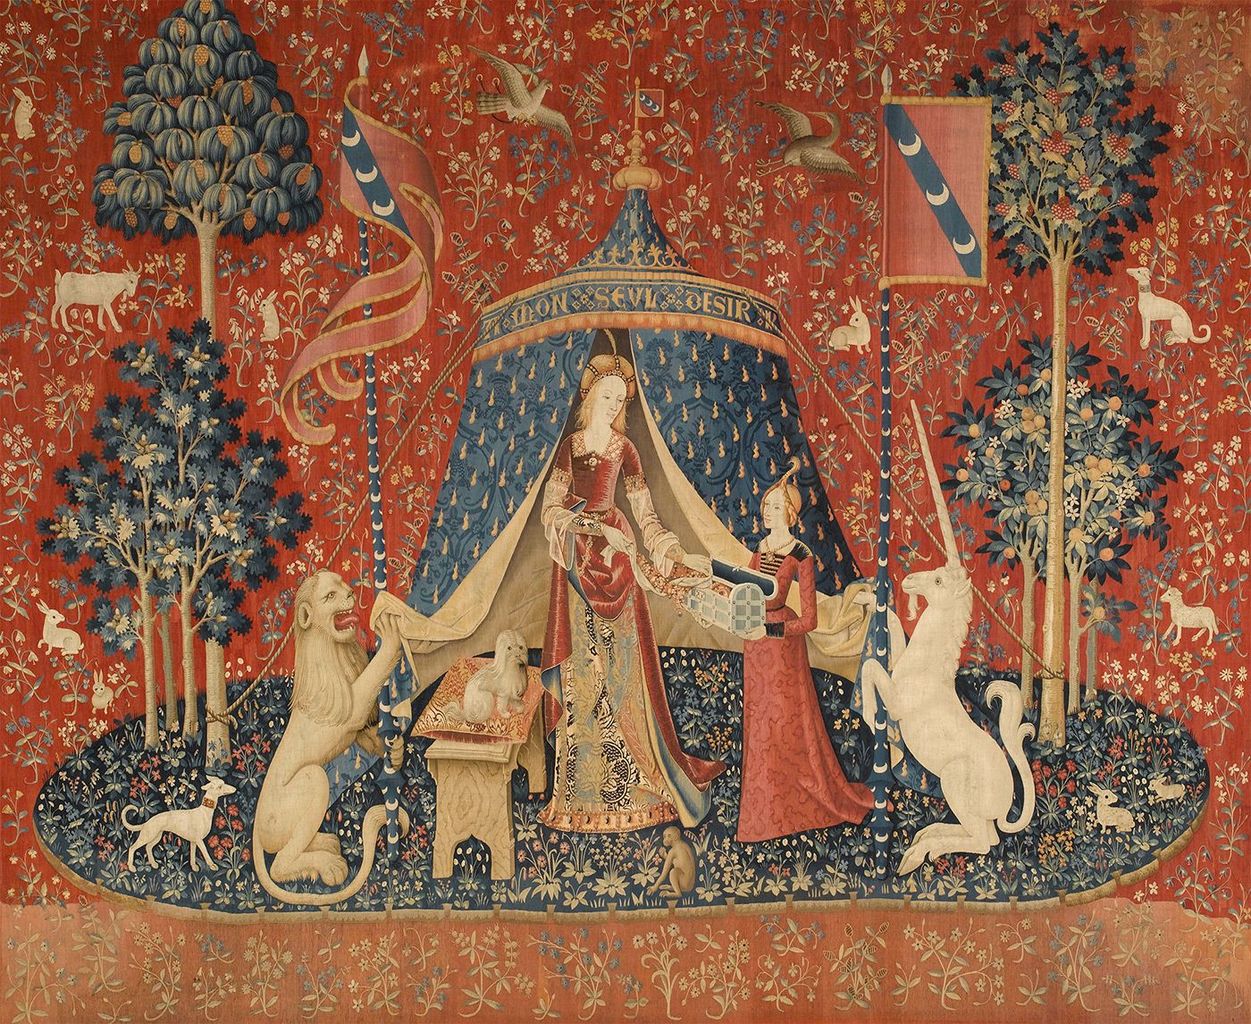 Unicorn Lore: Interpreting the Lady and the Unicorn Tapestries